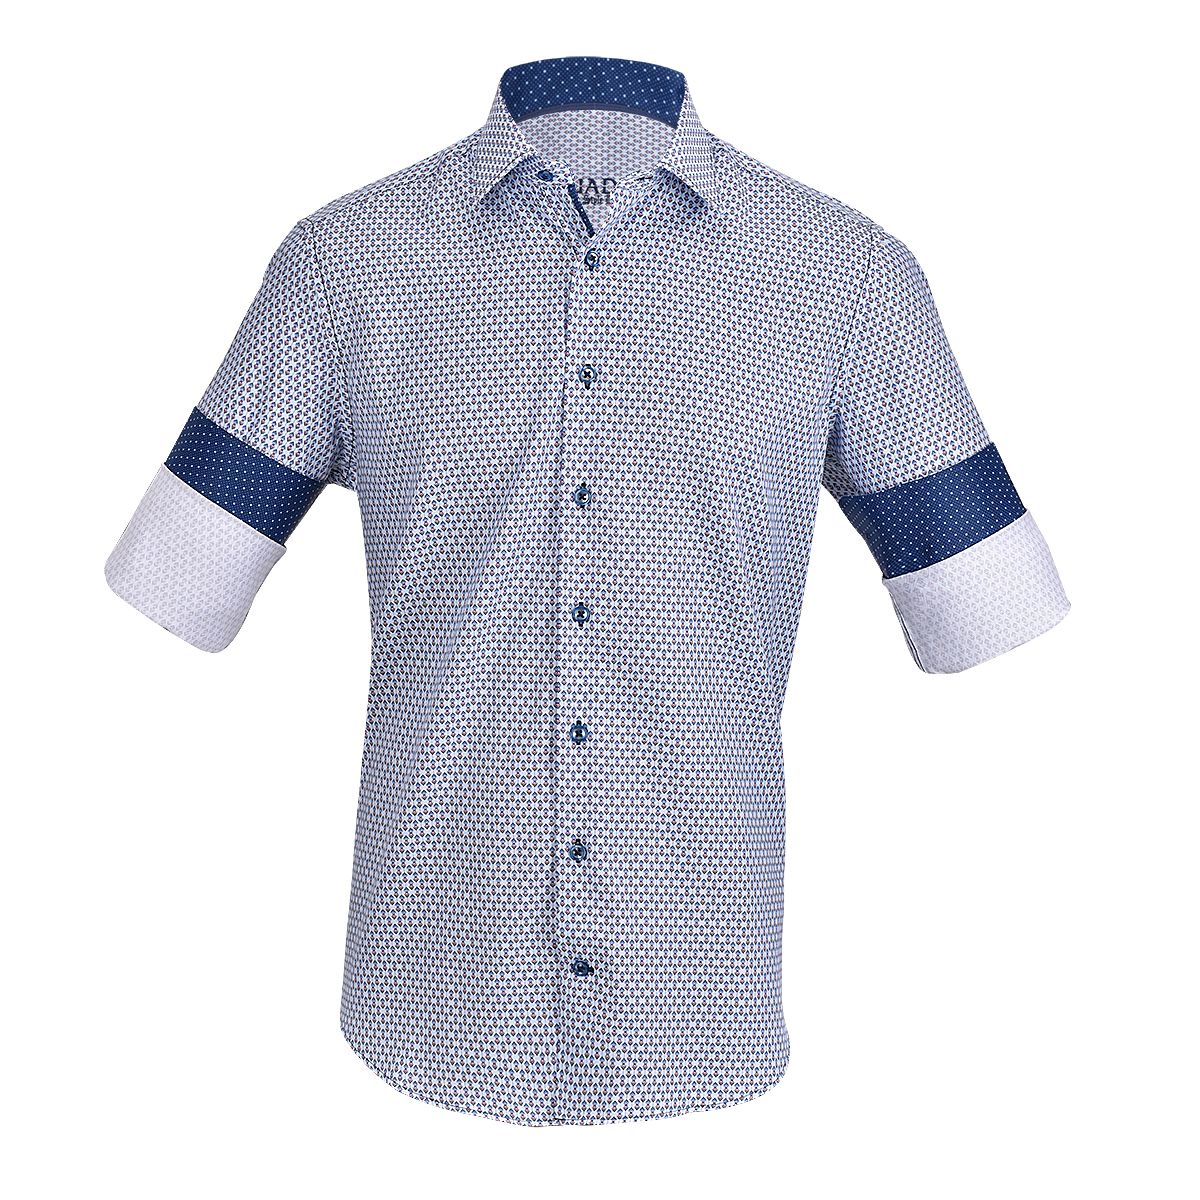 CM0W547 - Cuadra blue fashion soft cotton abstract shirt for men-Kuet.us